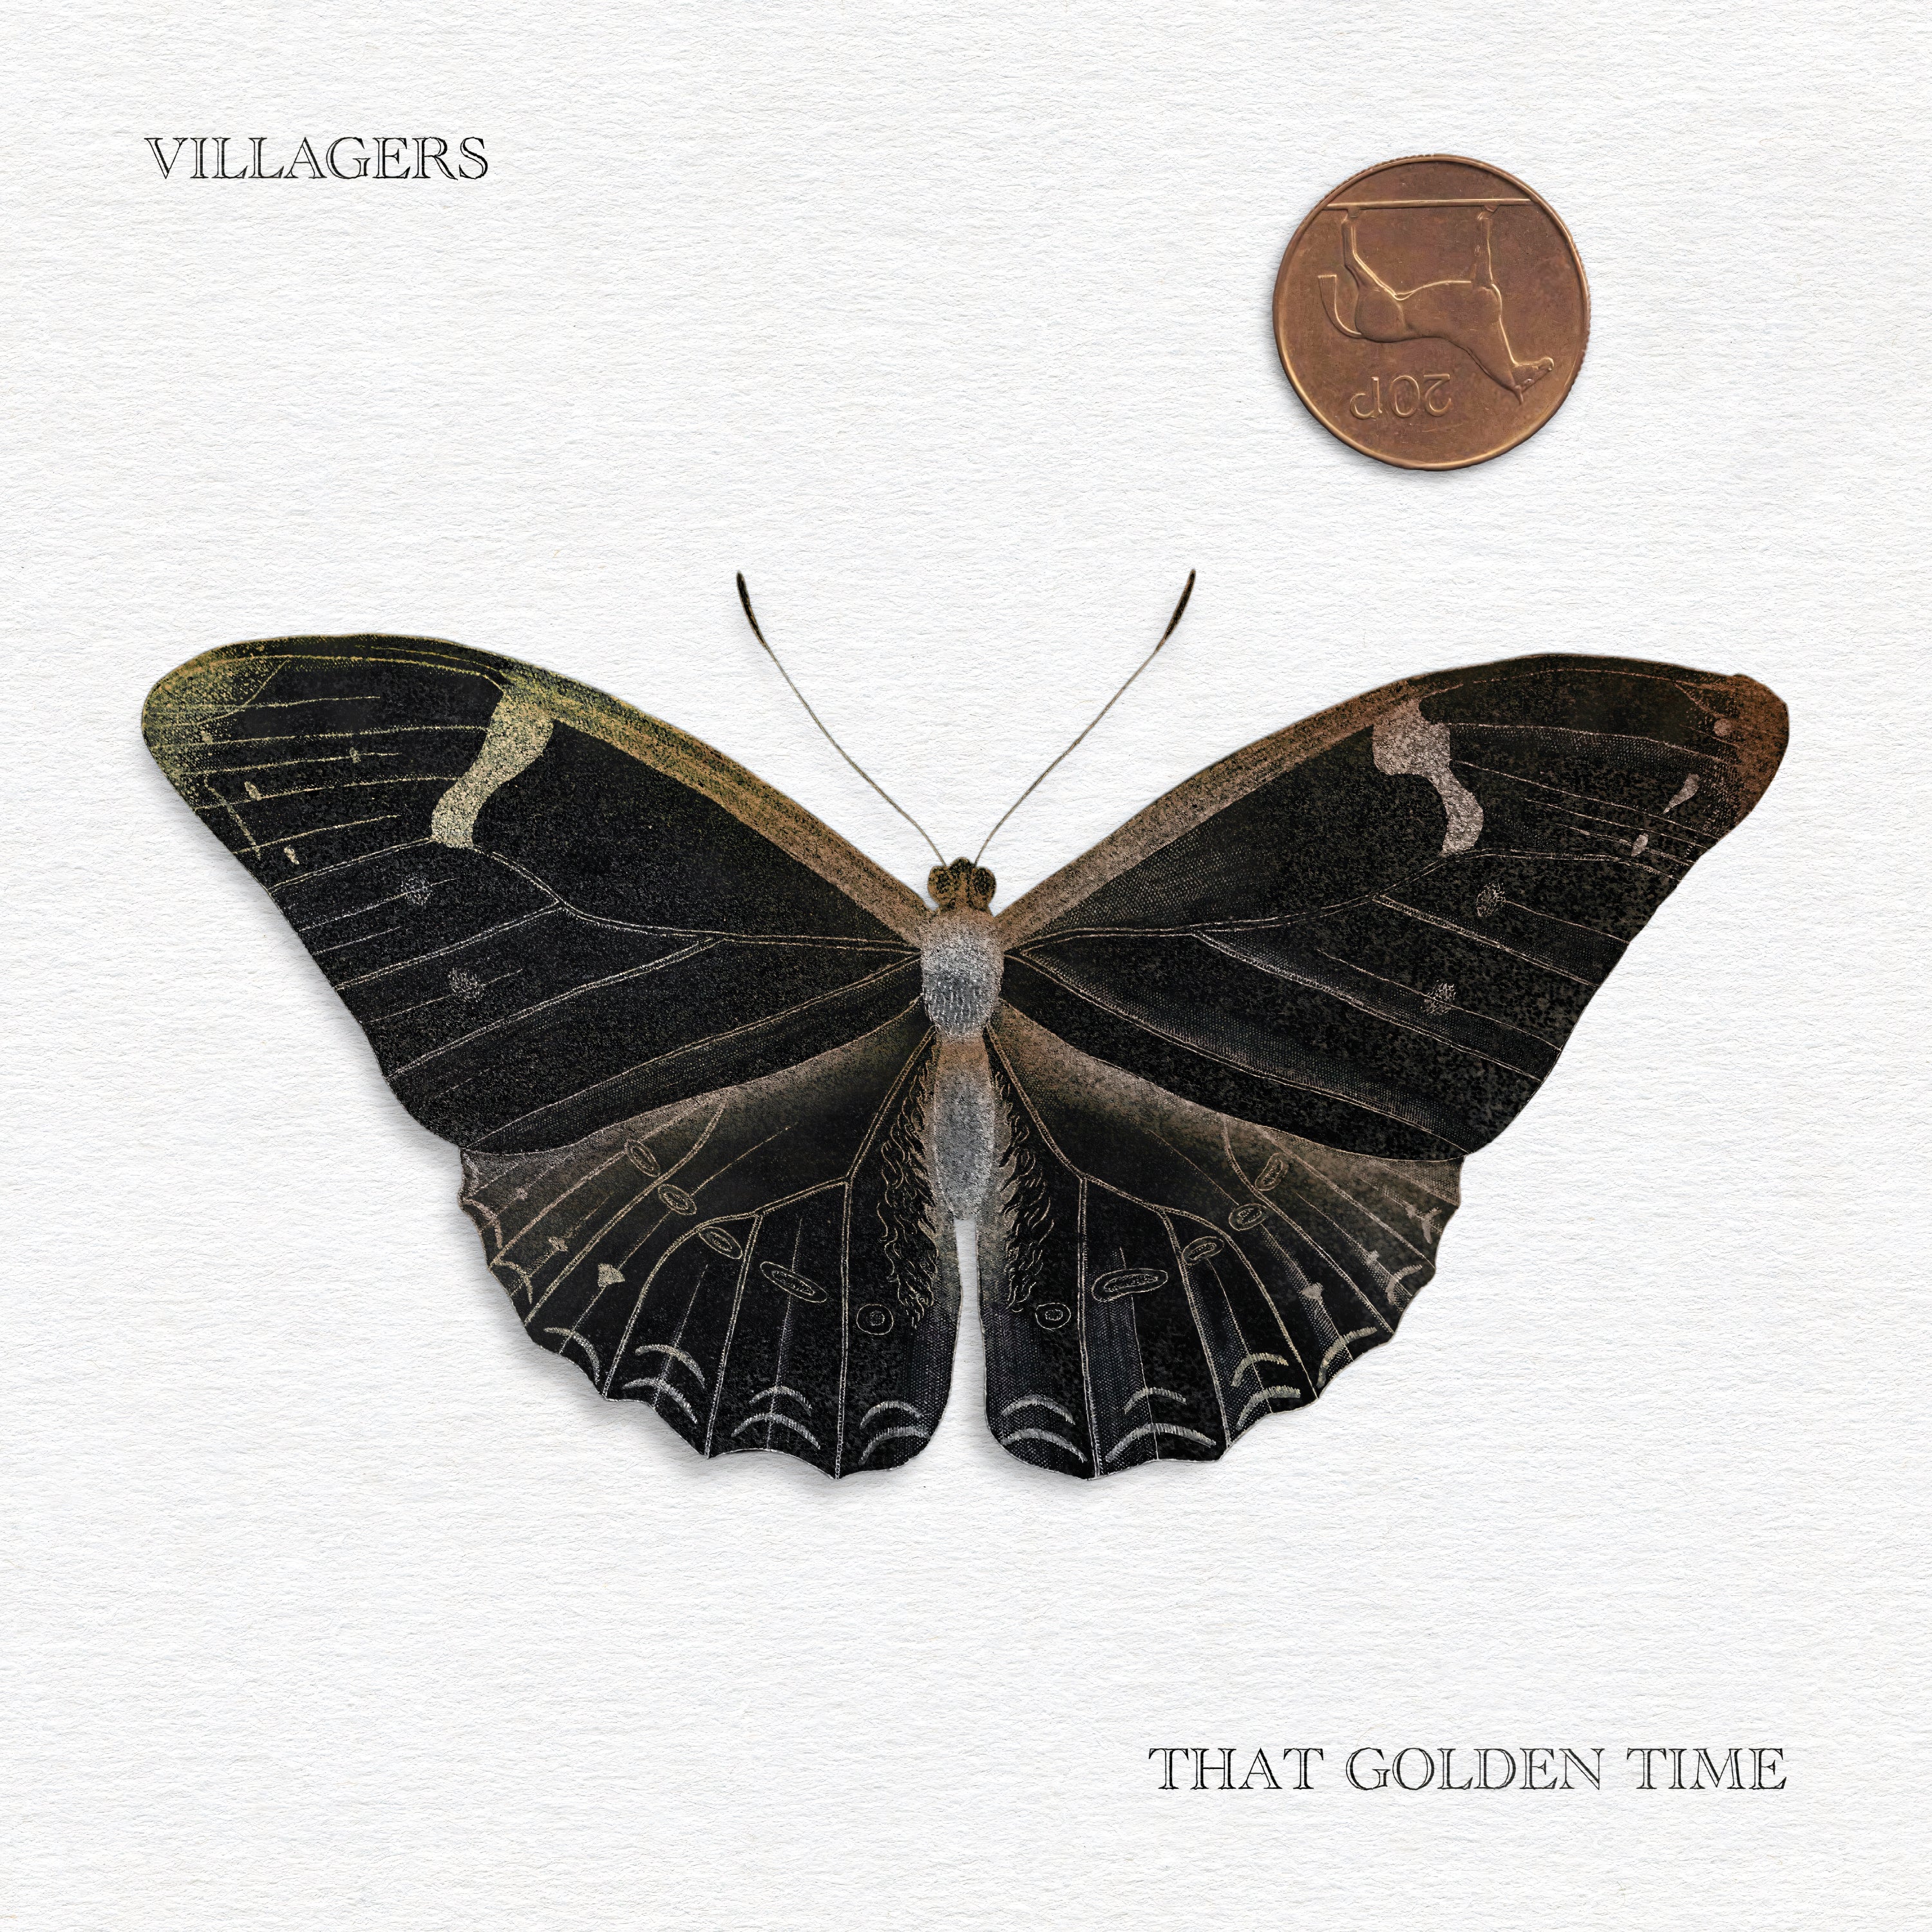 Villagers - That Golden Time LP LTD Irish Exclusive Clear Vinyl